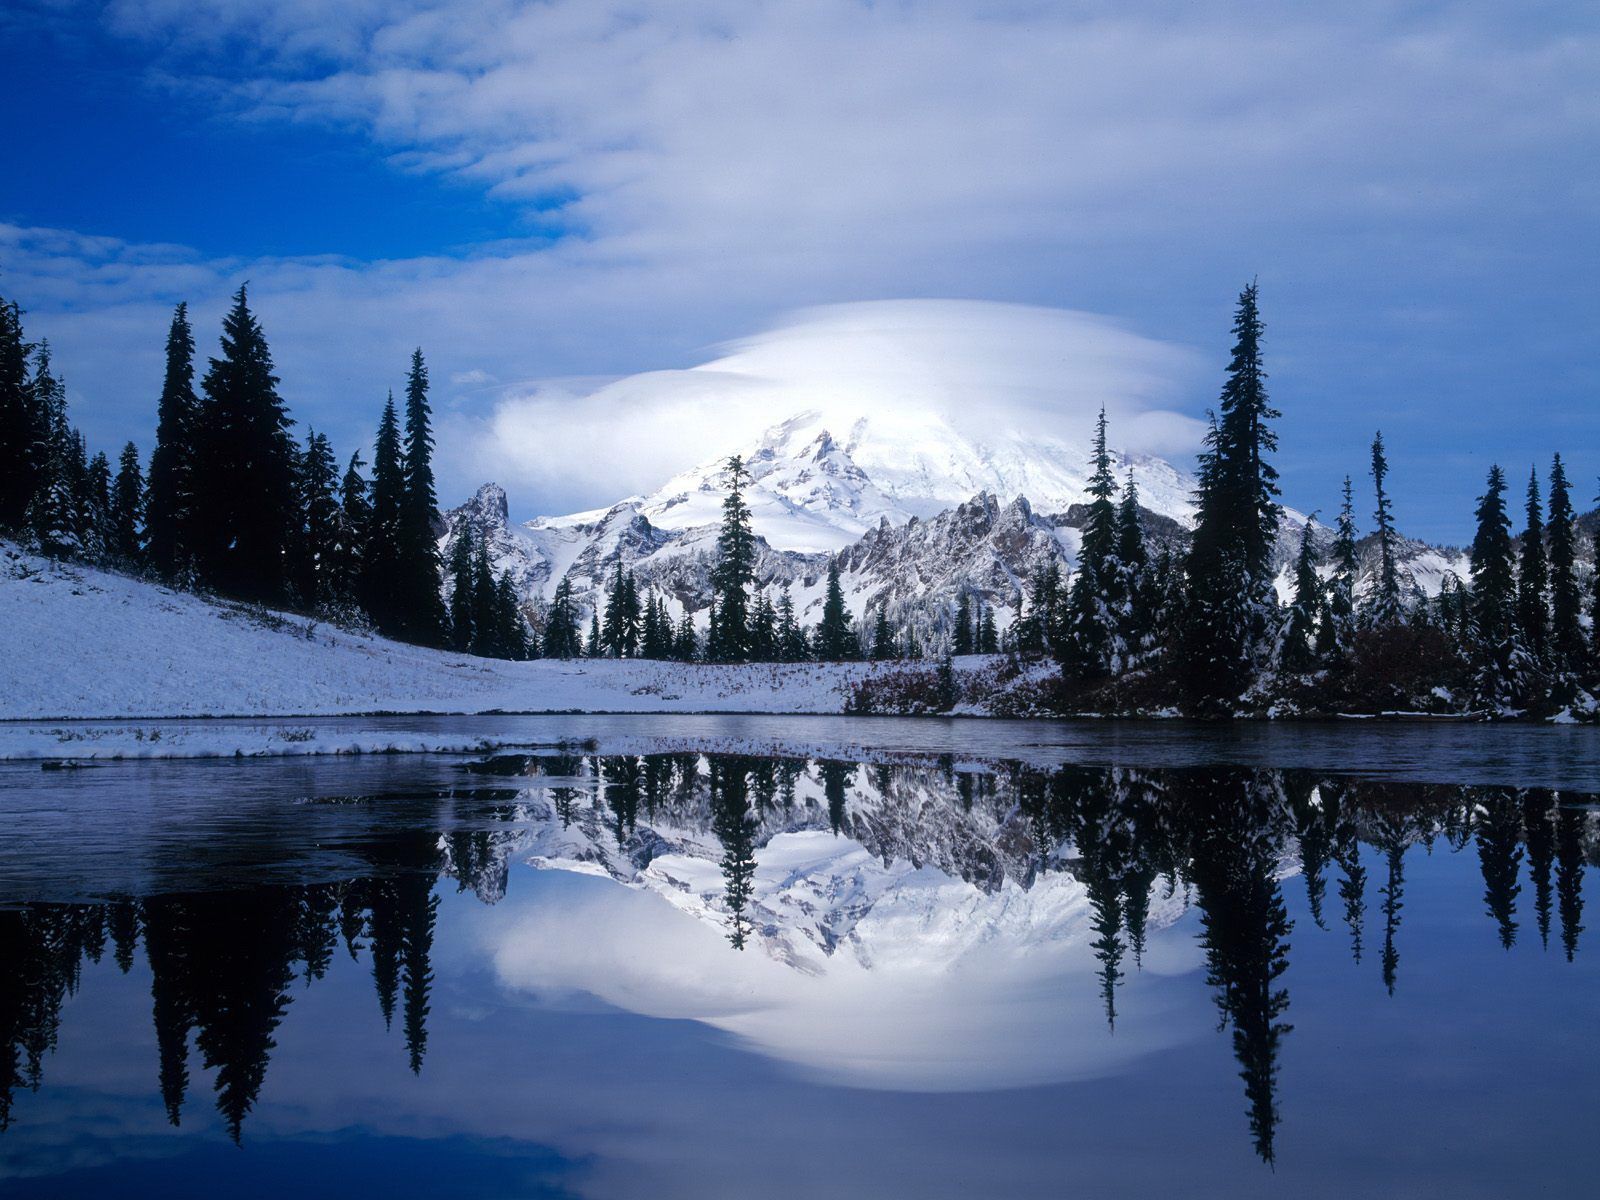 Free Download Snowy Mountains Background. Winter scenery, Winter landscape, Beautiful winter scenes